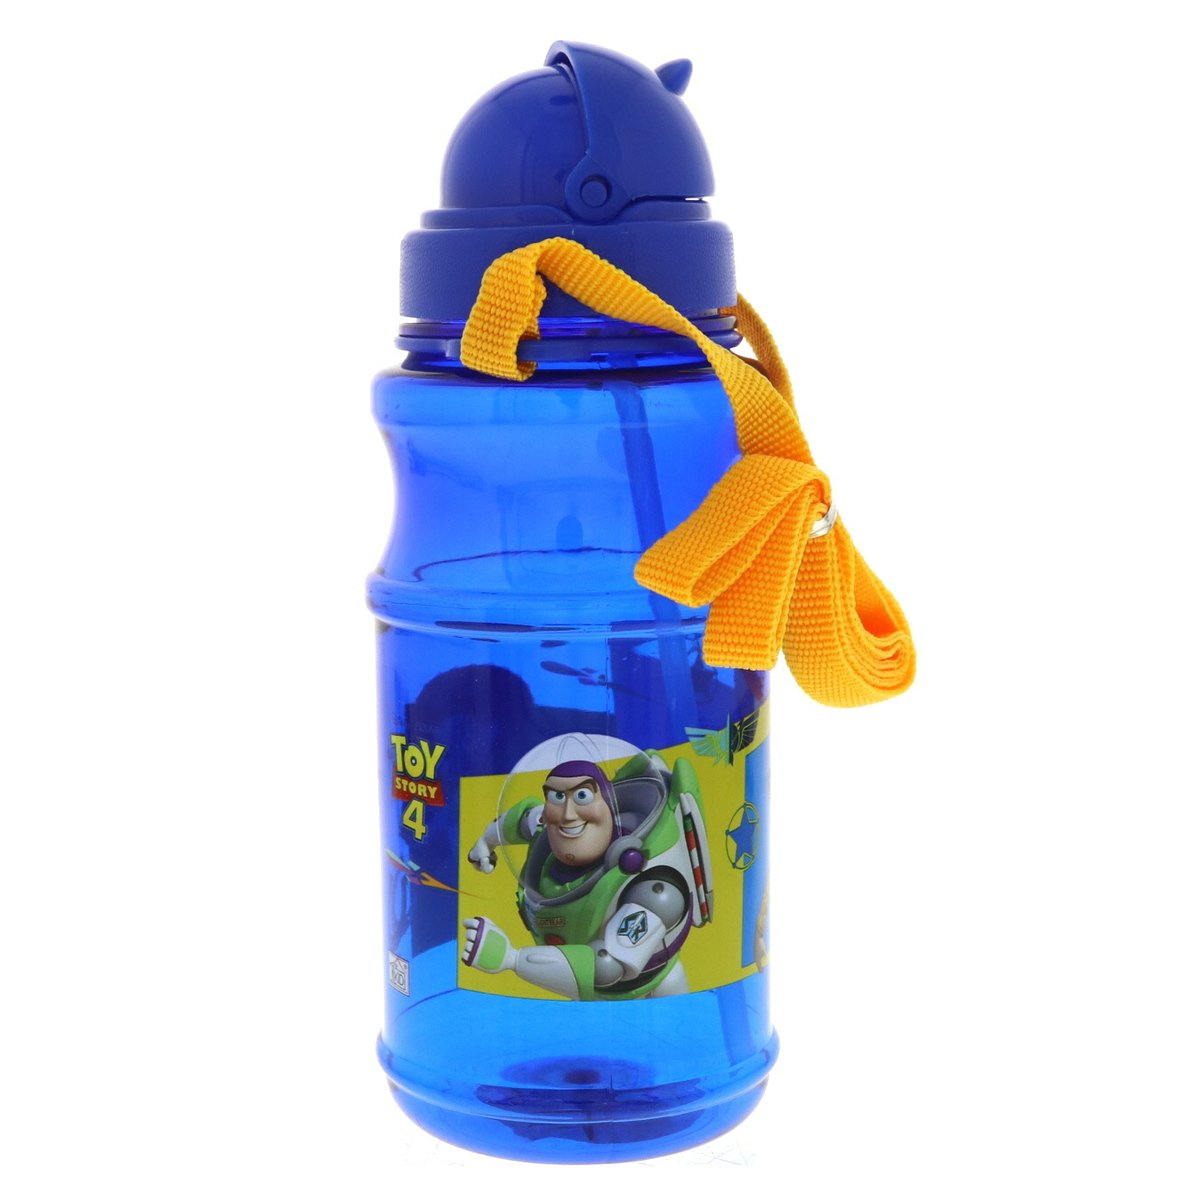 Shop Toy Story 4 Water Bottle with Orange Strap Online in Qatar